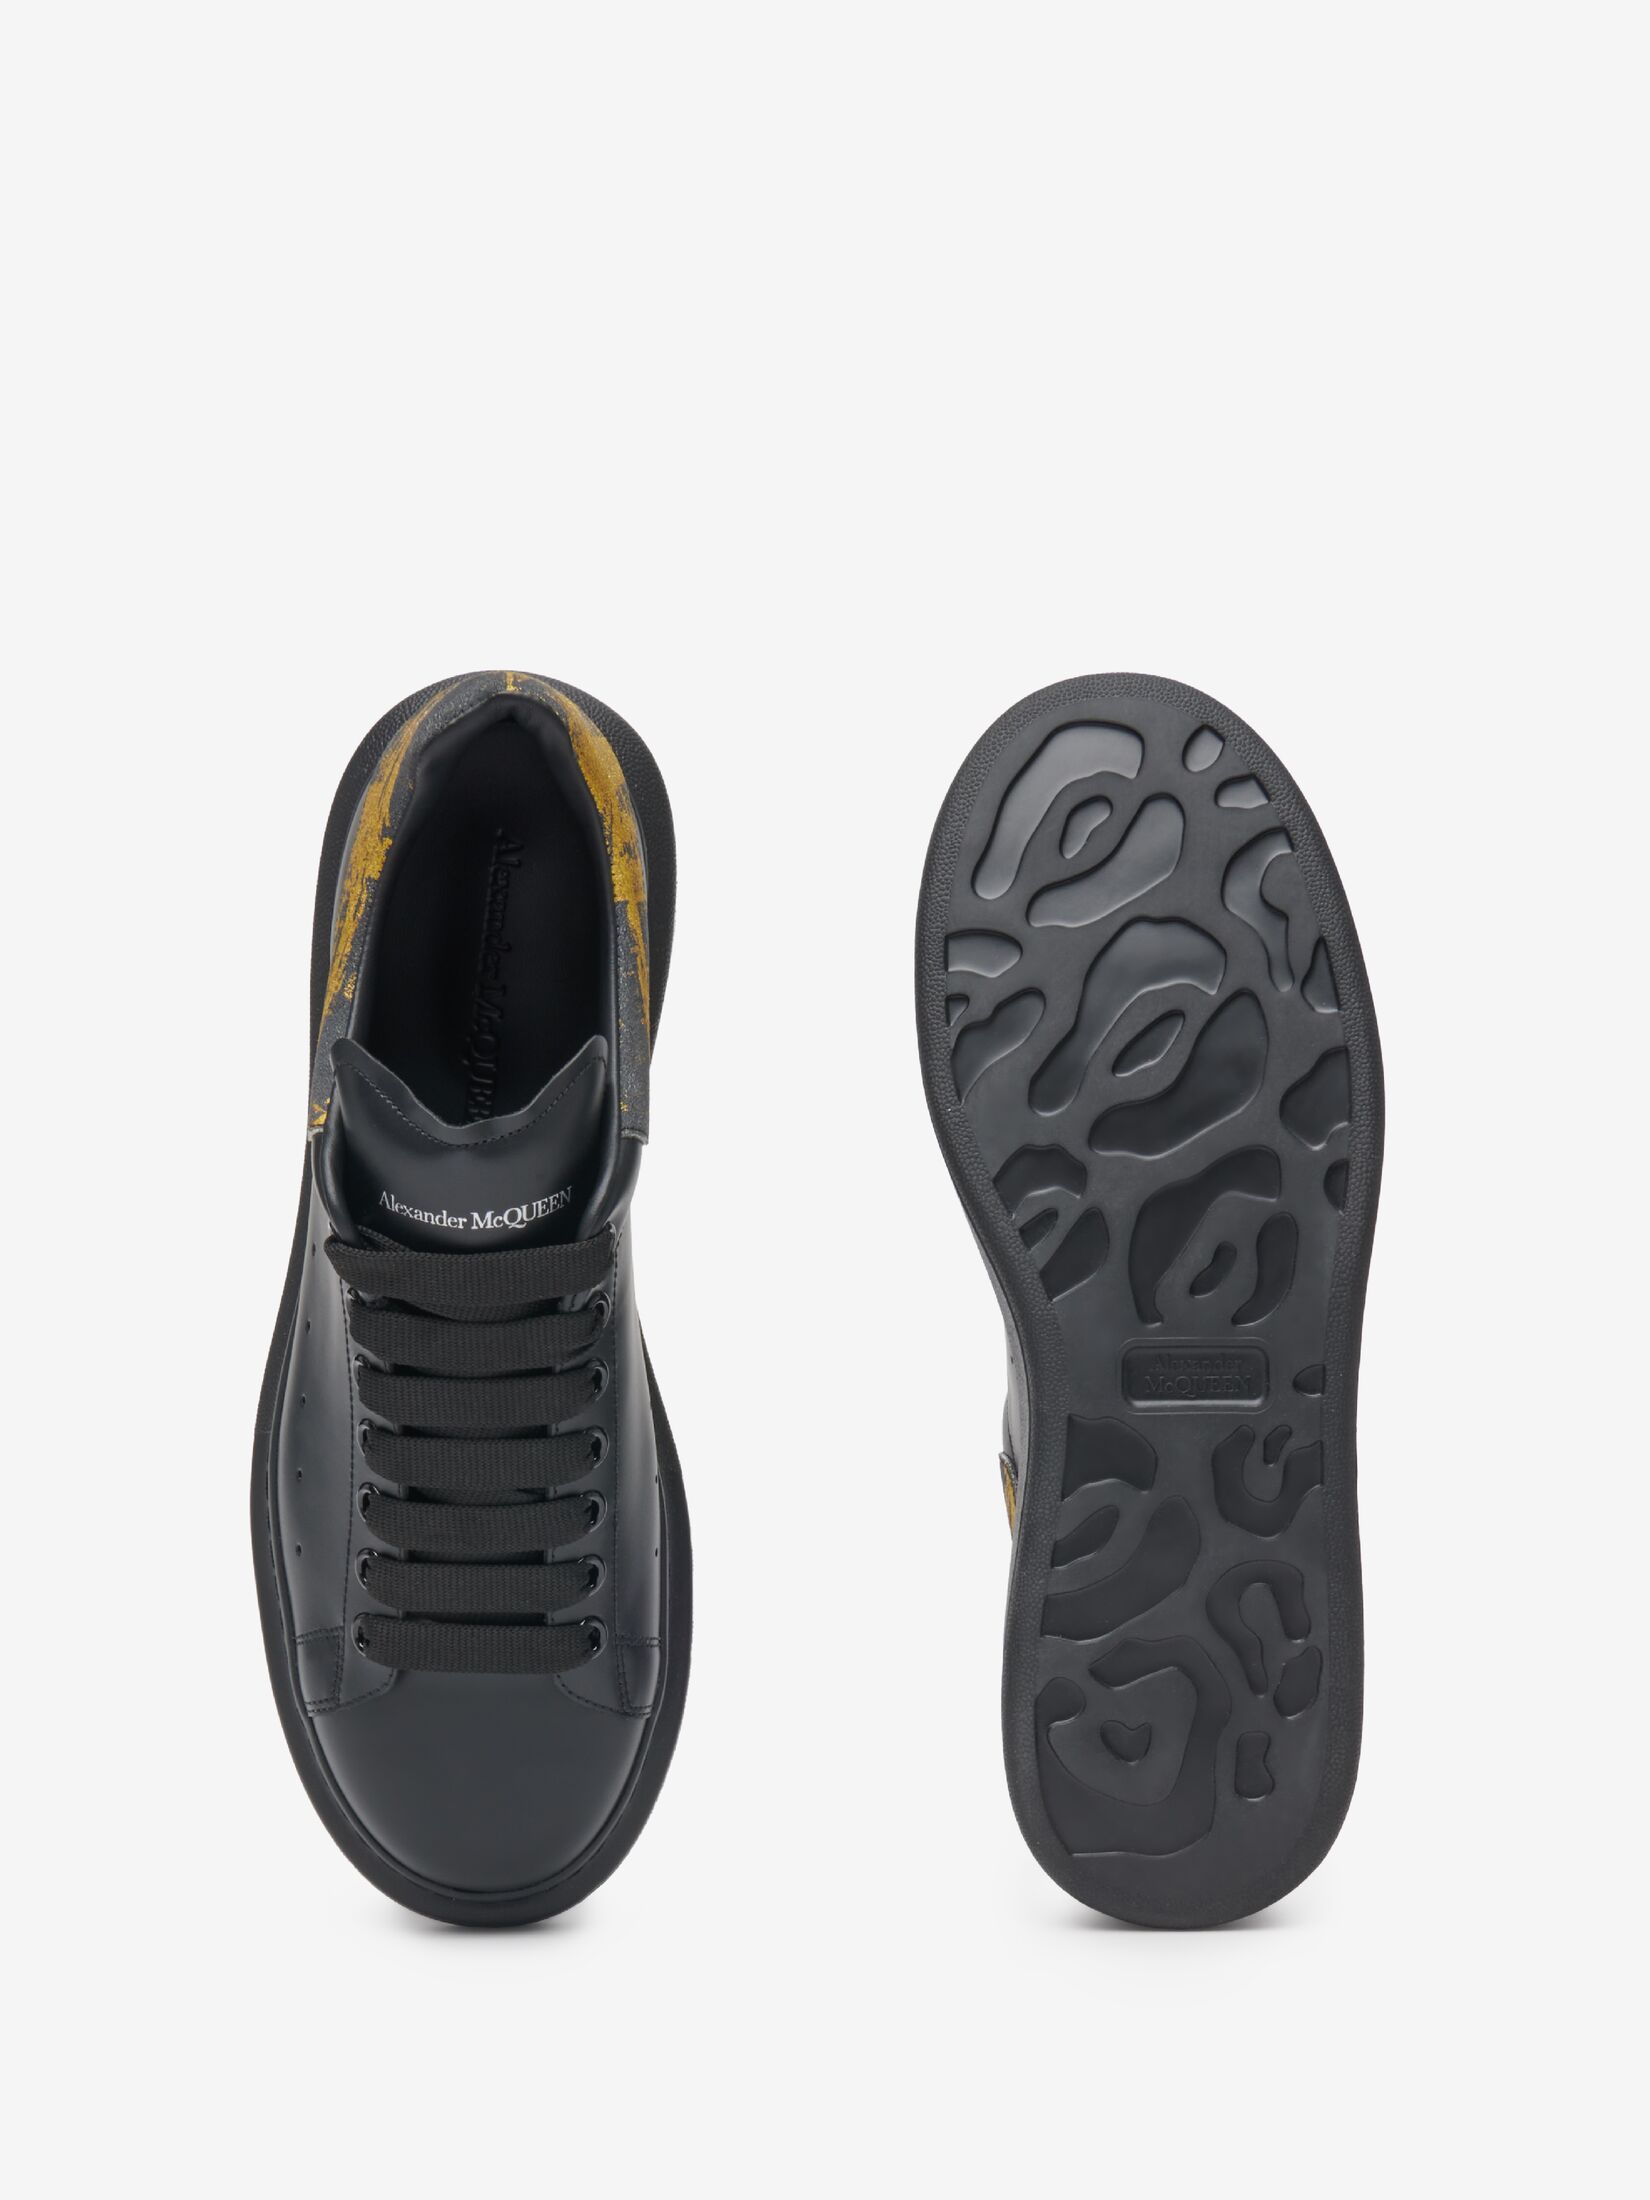 Alexander McQueen Sneaker herren oversize 553680WHGP59000 Leder Logo schuhe  | eBay